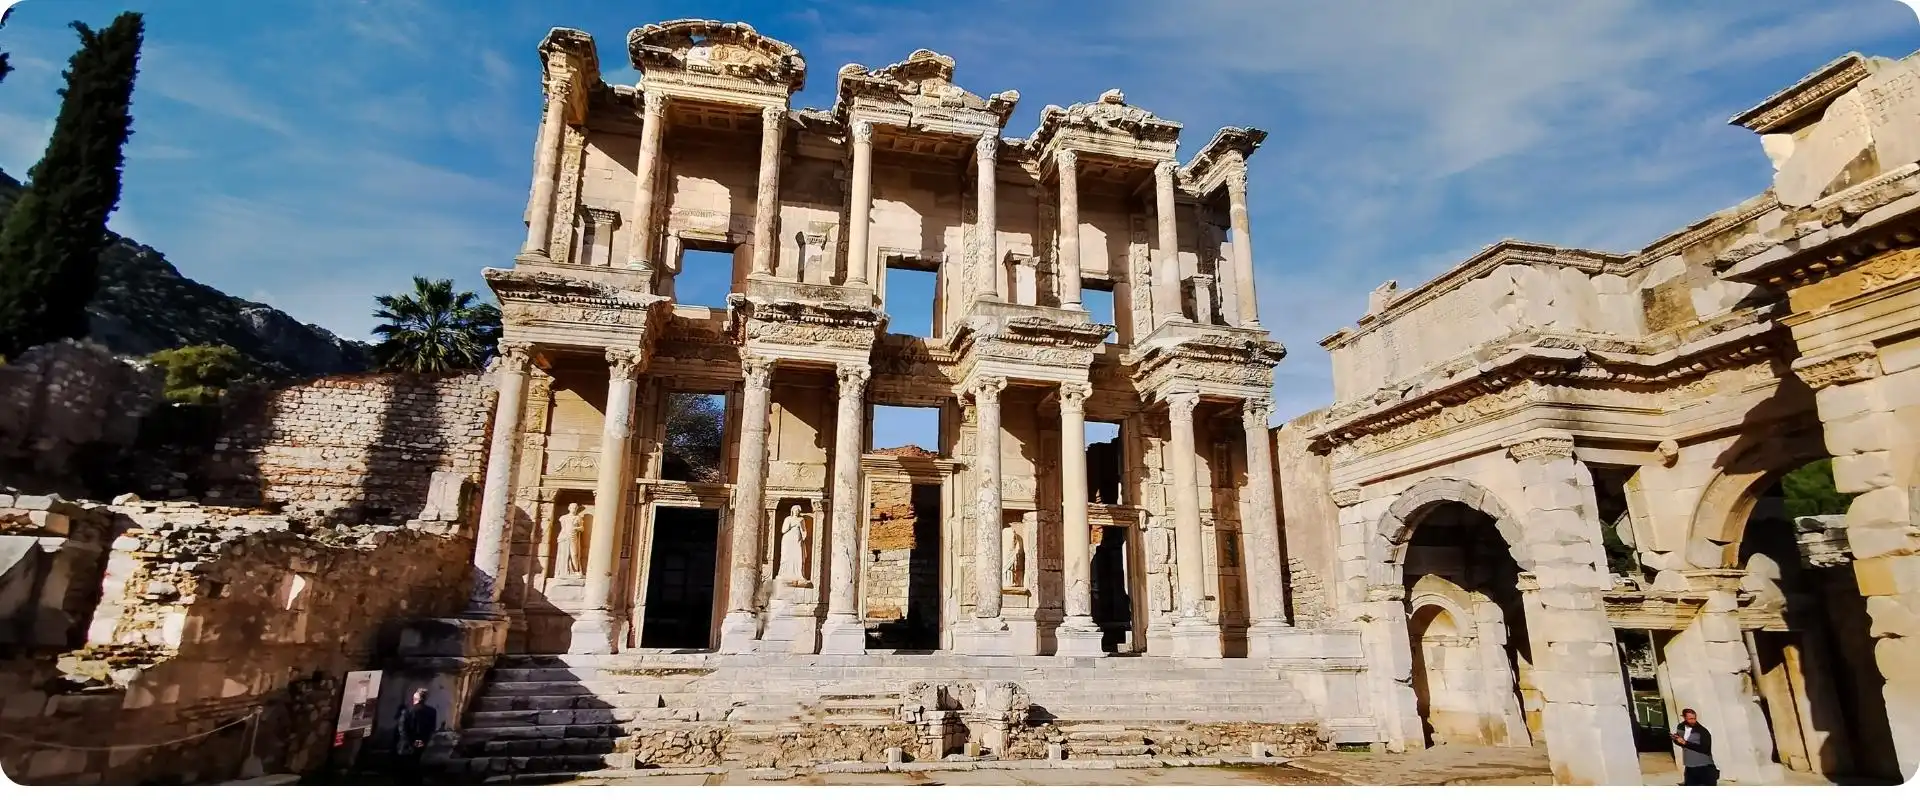 Efesos charterrejse til tyrkiet flyv fra hamborg.webp